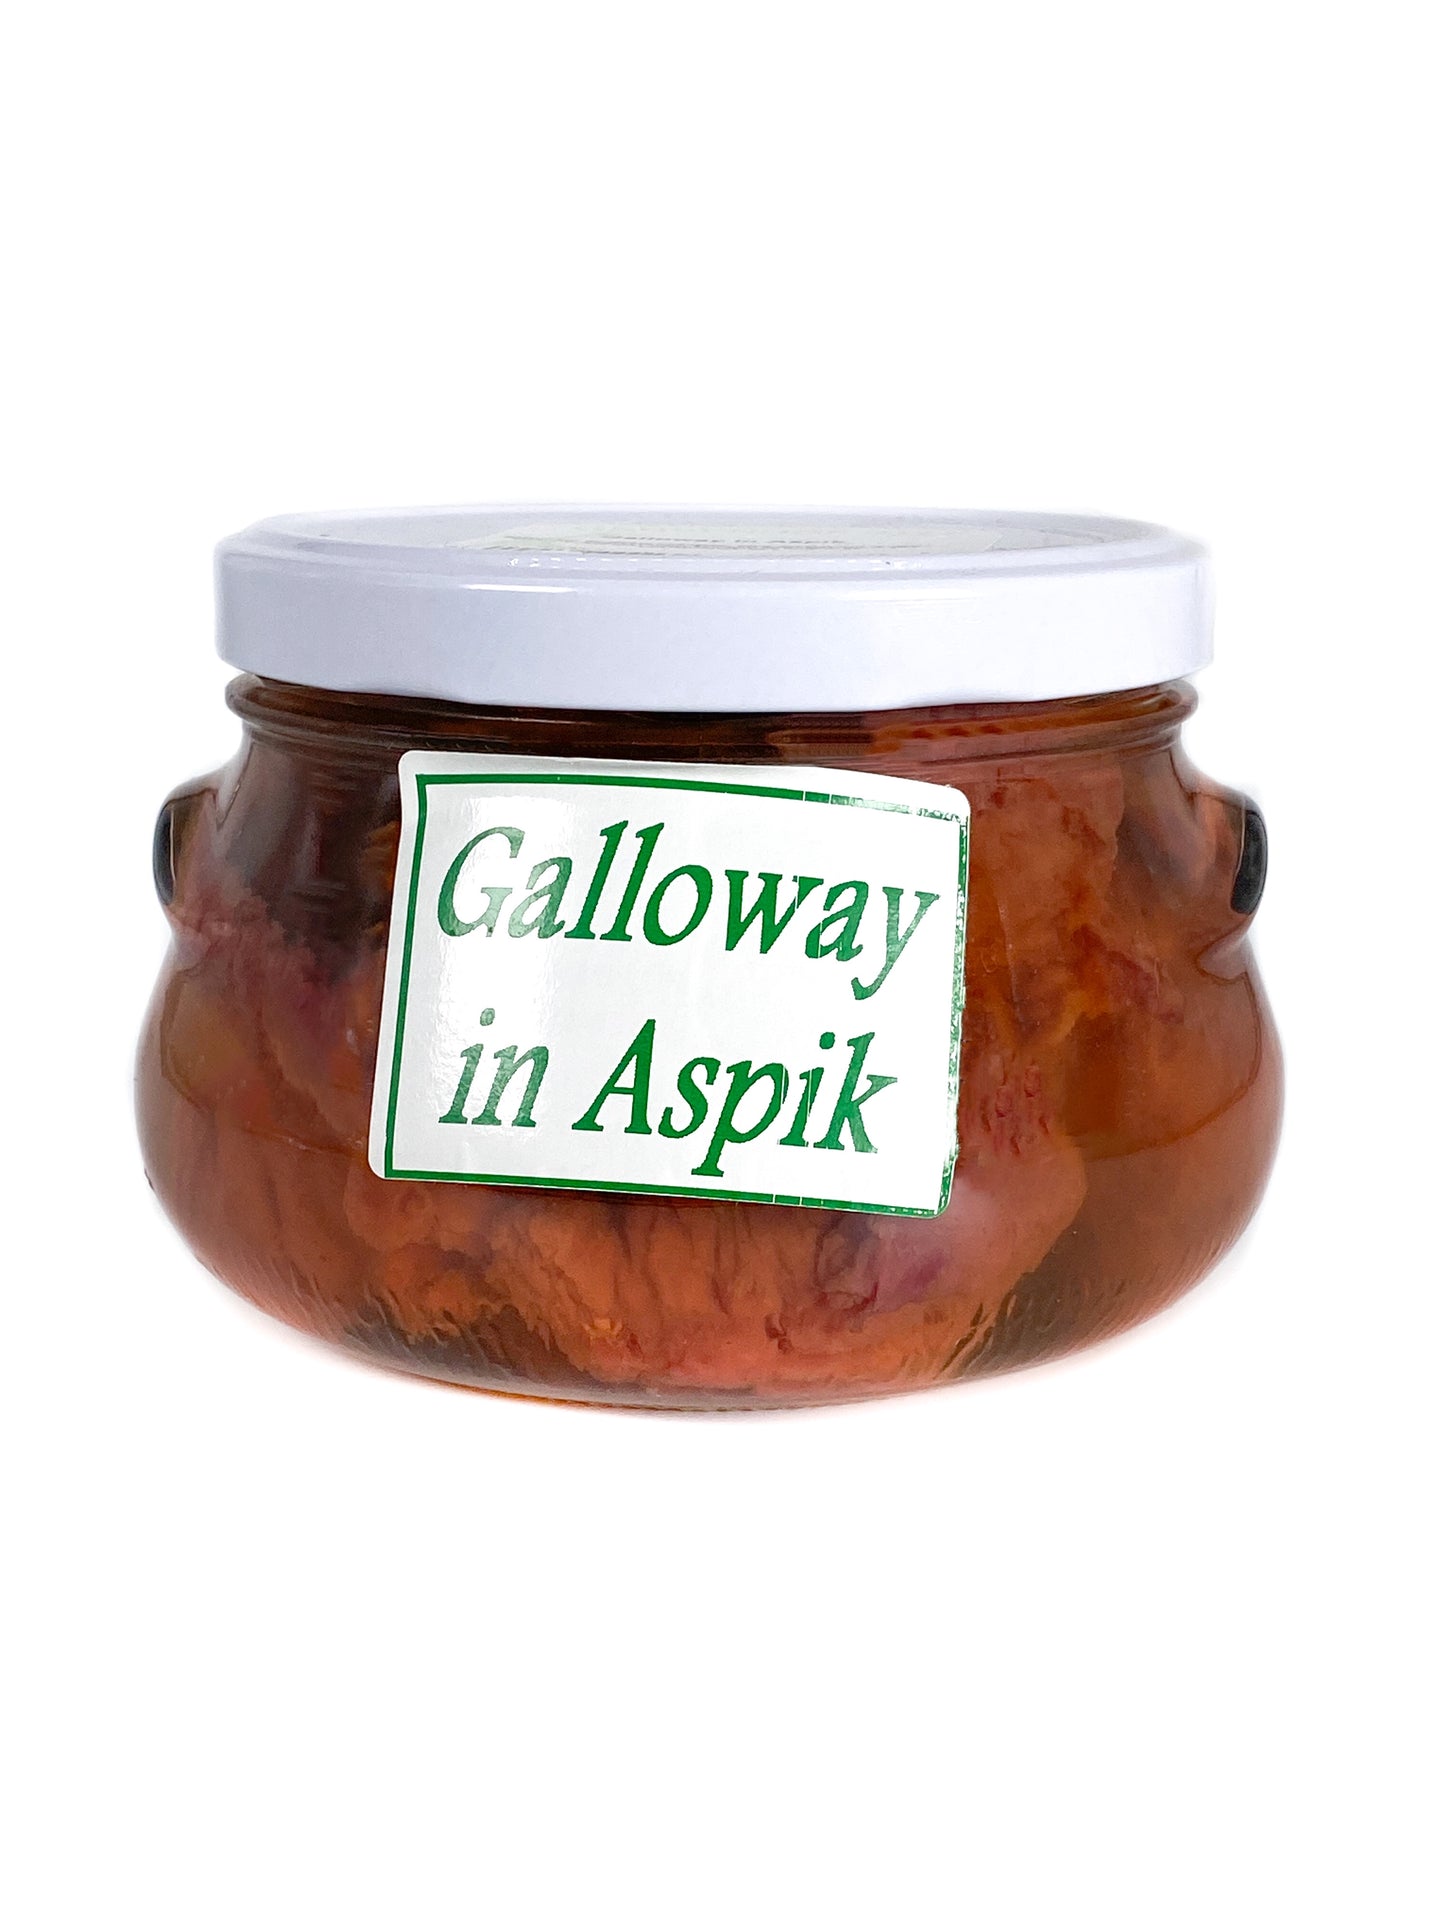 Galloway in Aspik